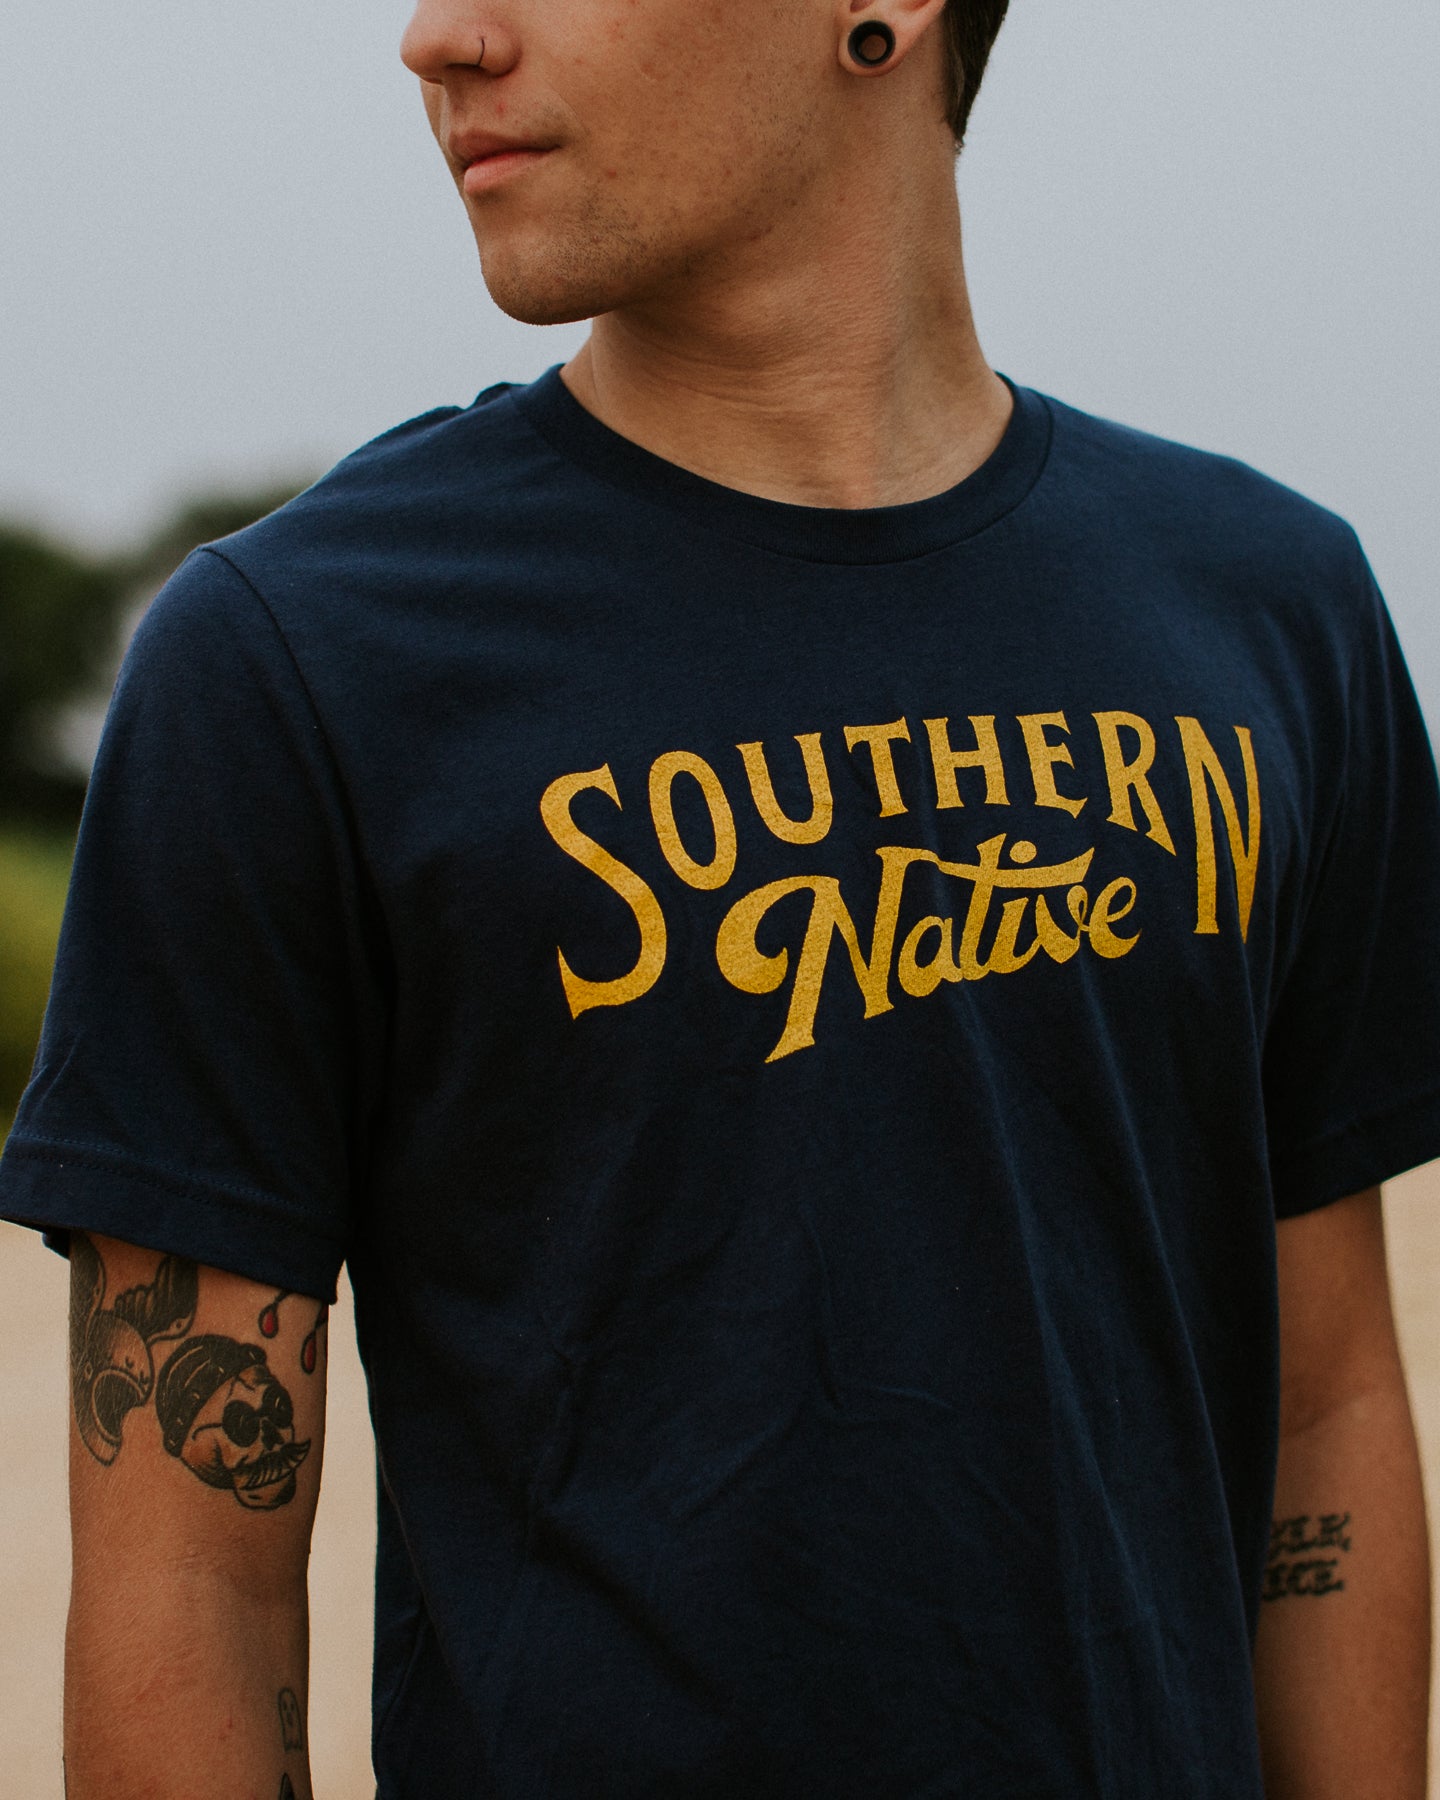 Southern Native Horizontal Typeface Shirt